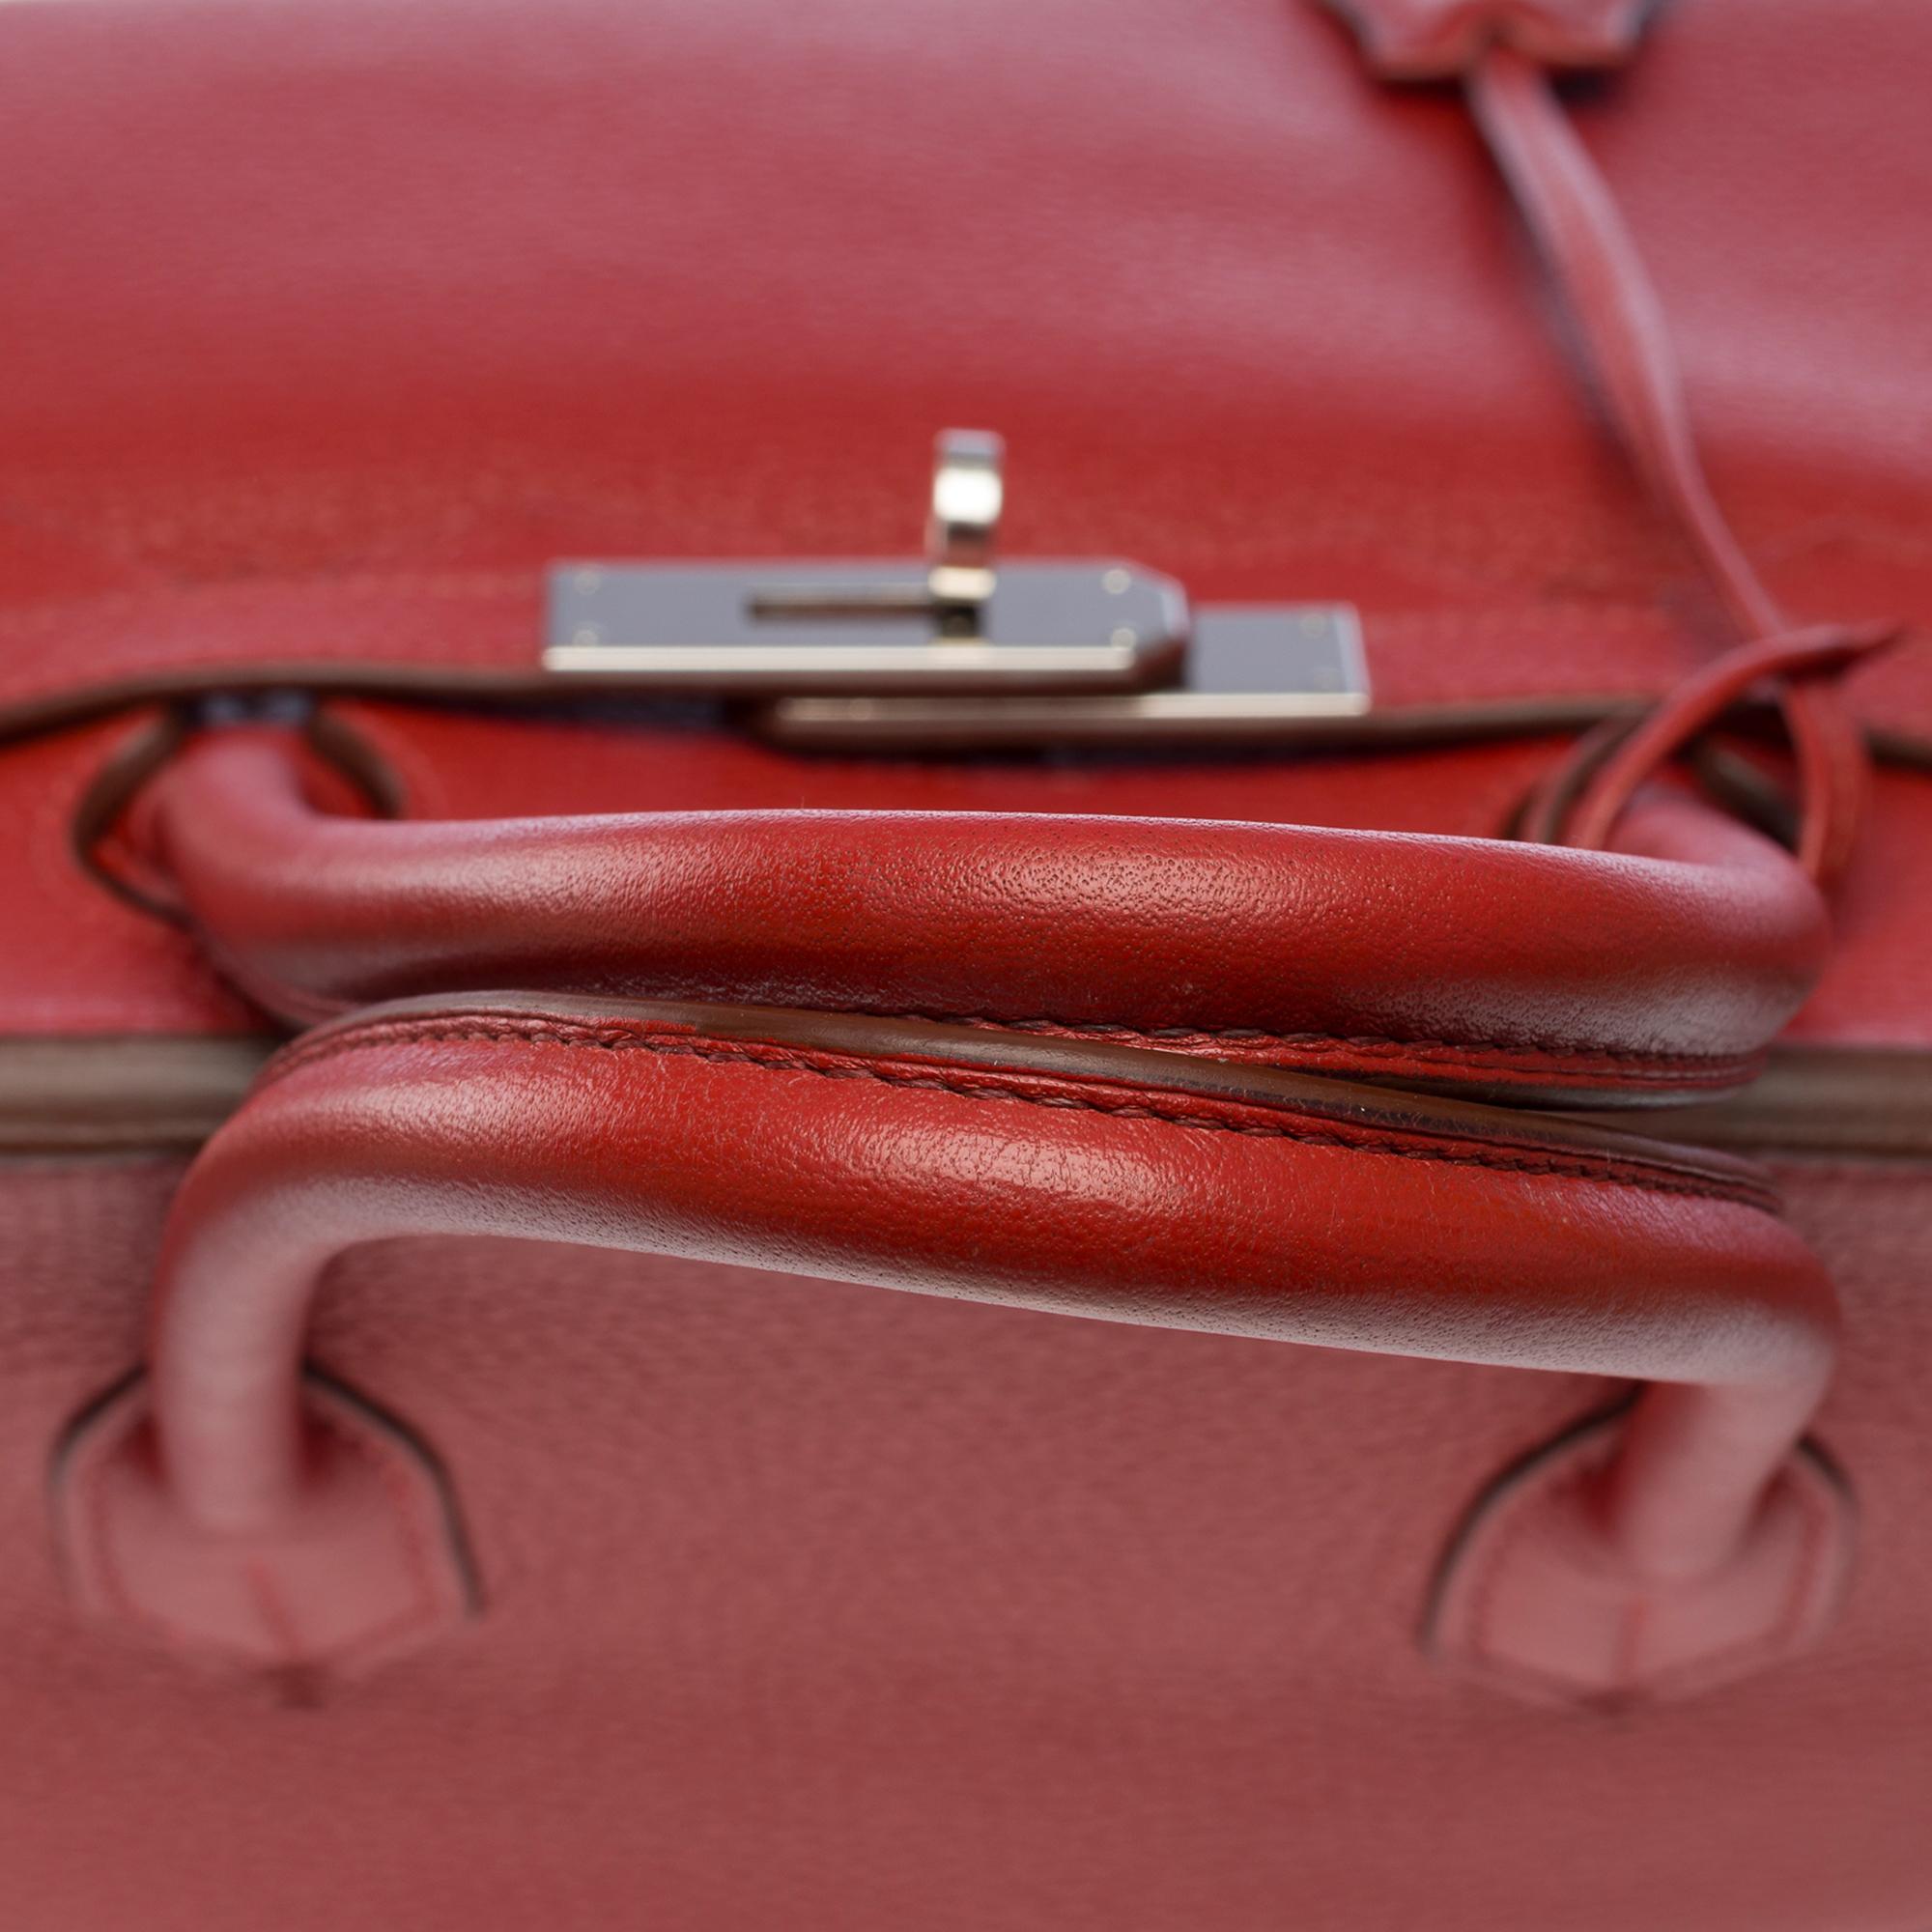 Stunning Hermès Birkin 35 handbag in Sienne Togo leather, SHW For Sale 7